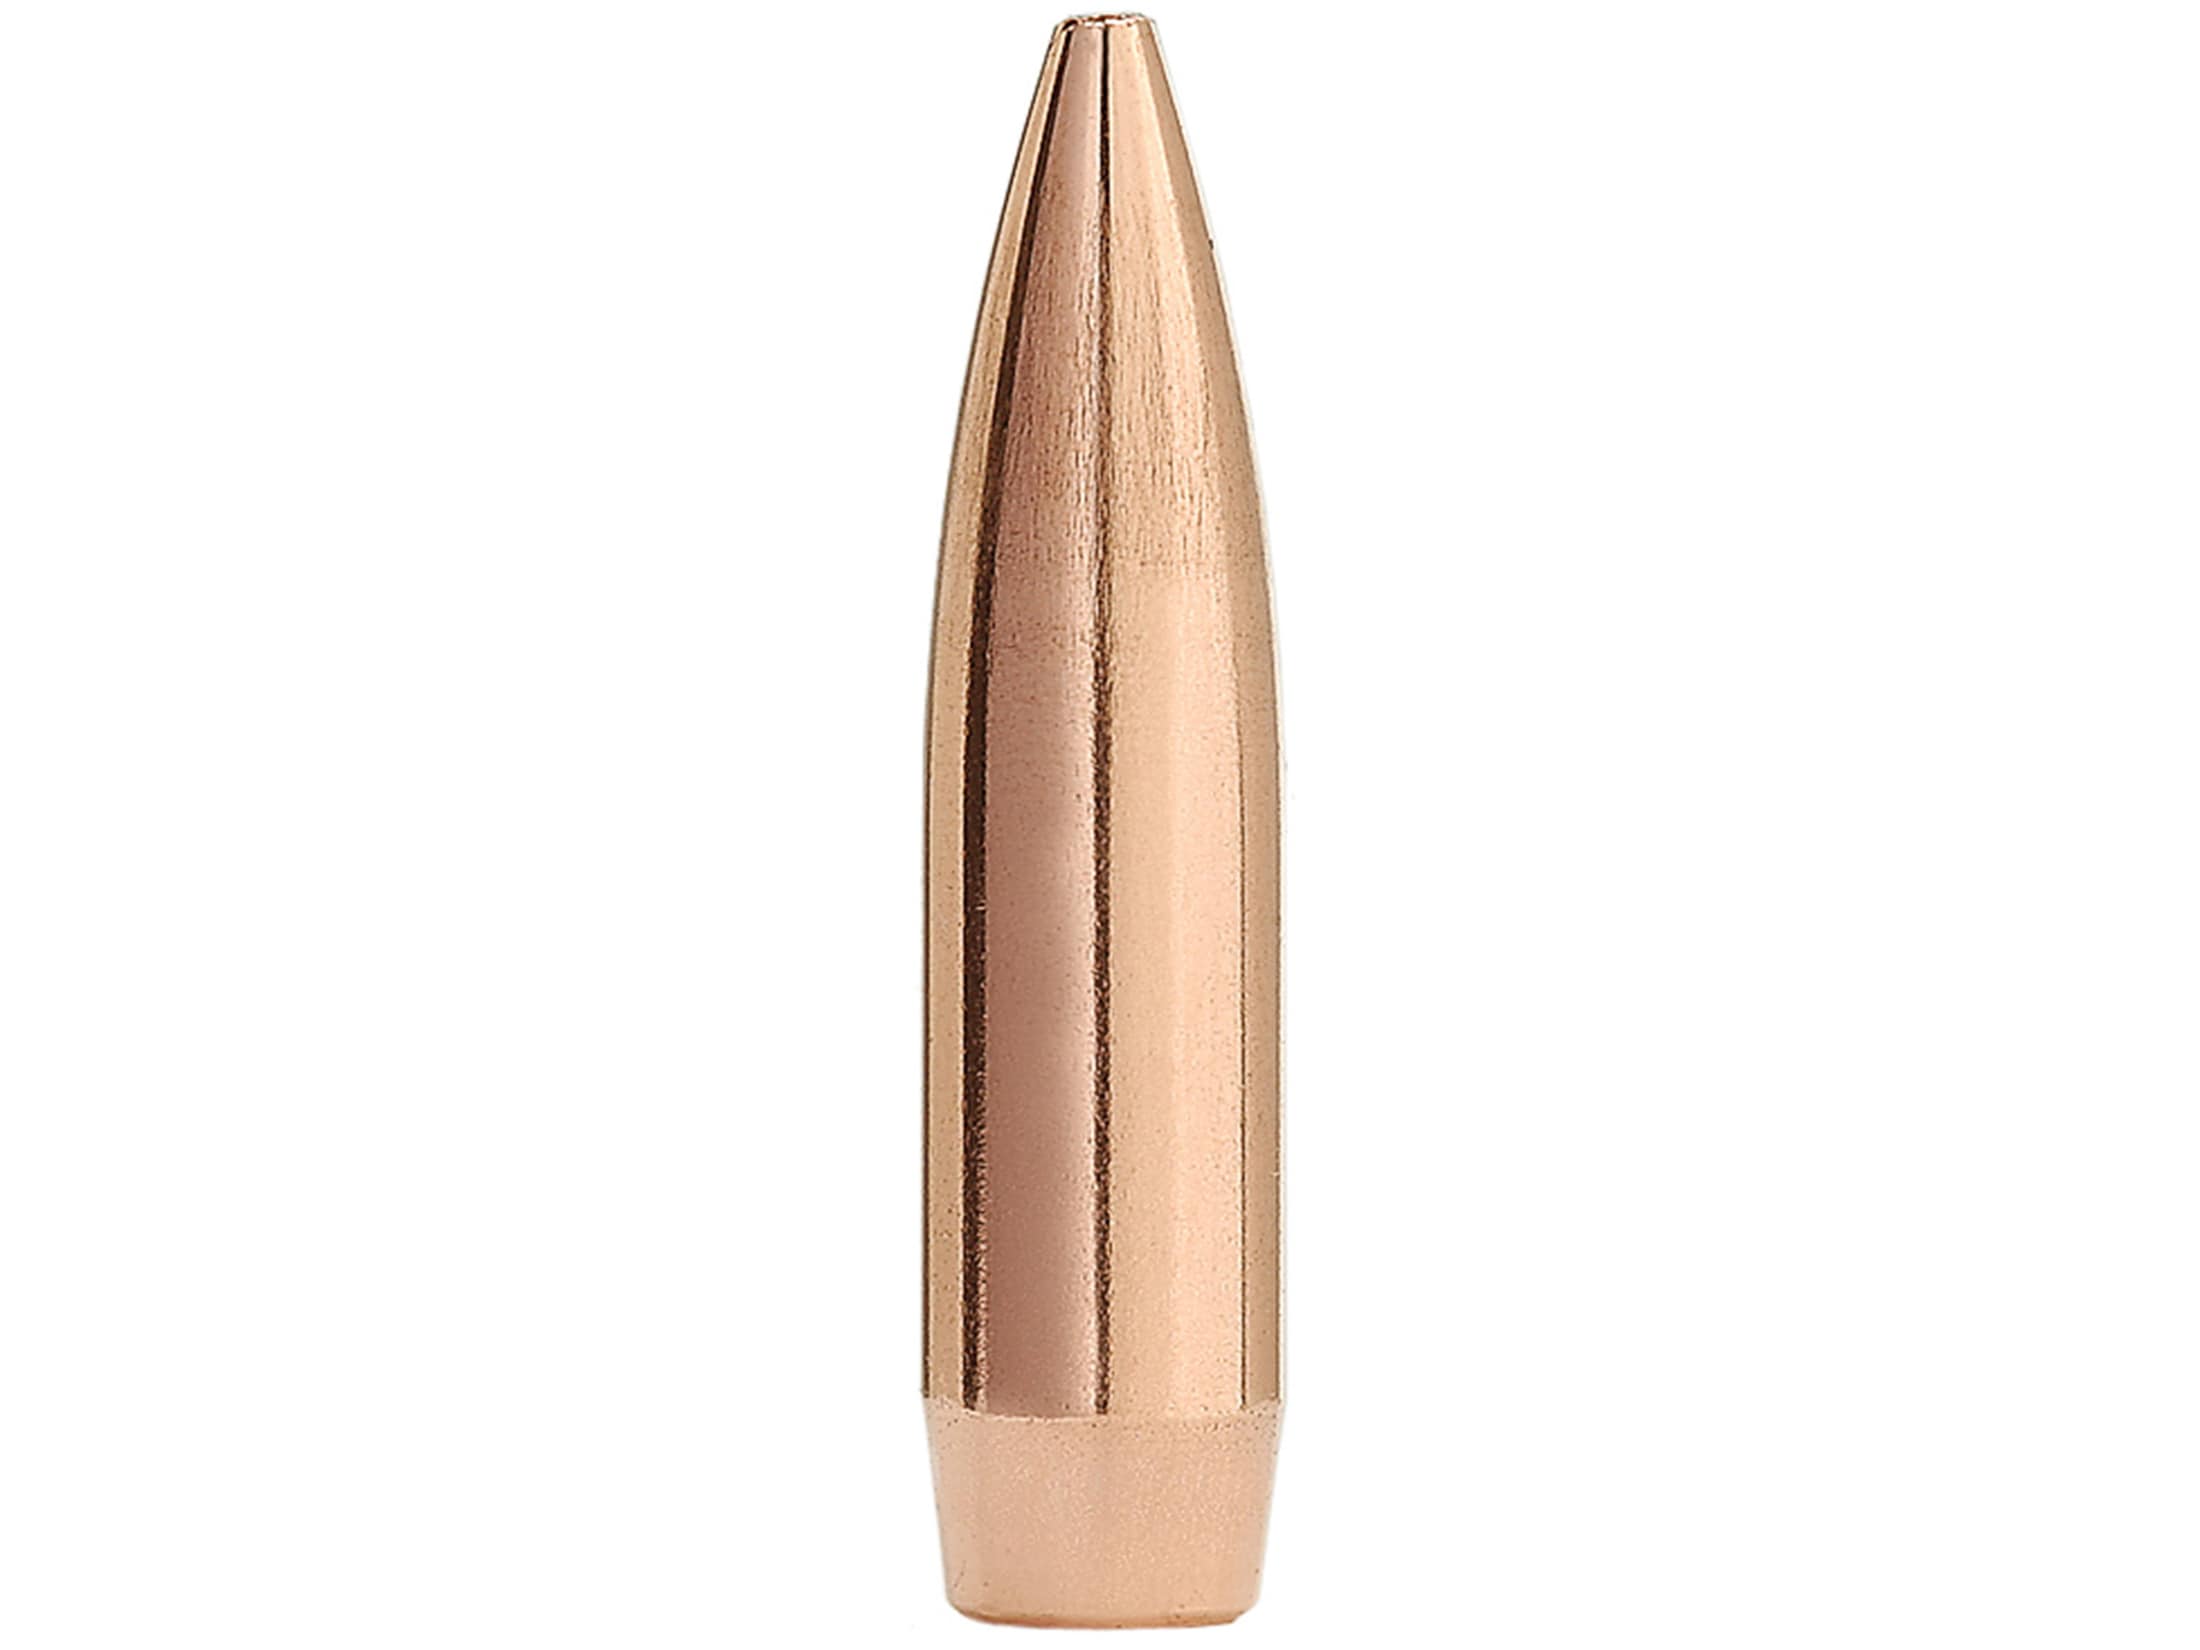 Sierra MatchKing Bullets 22 Caliber (224 Diameter) 77 Grain Hollow Point Boat Tail